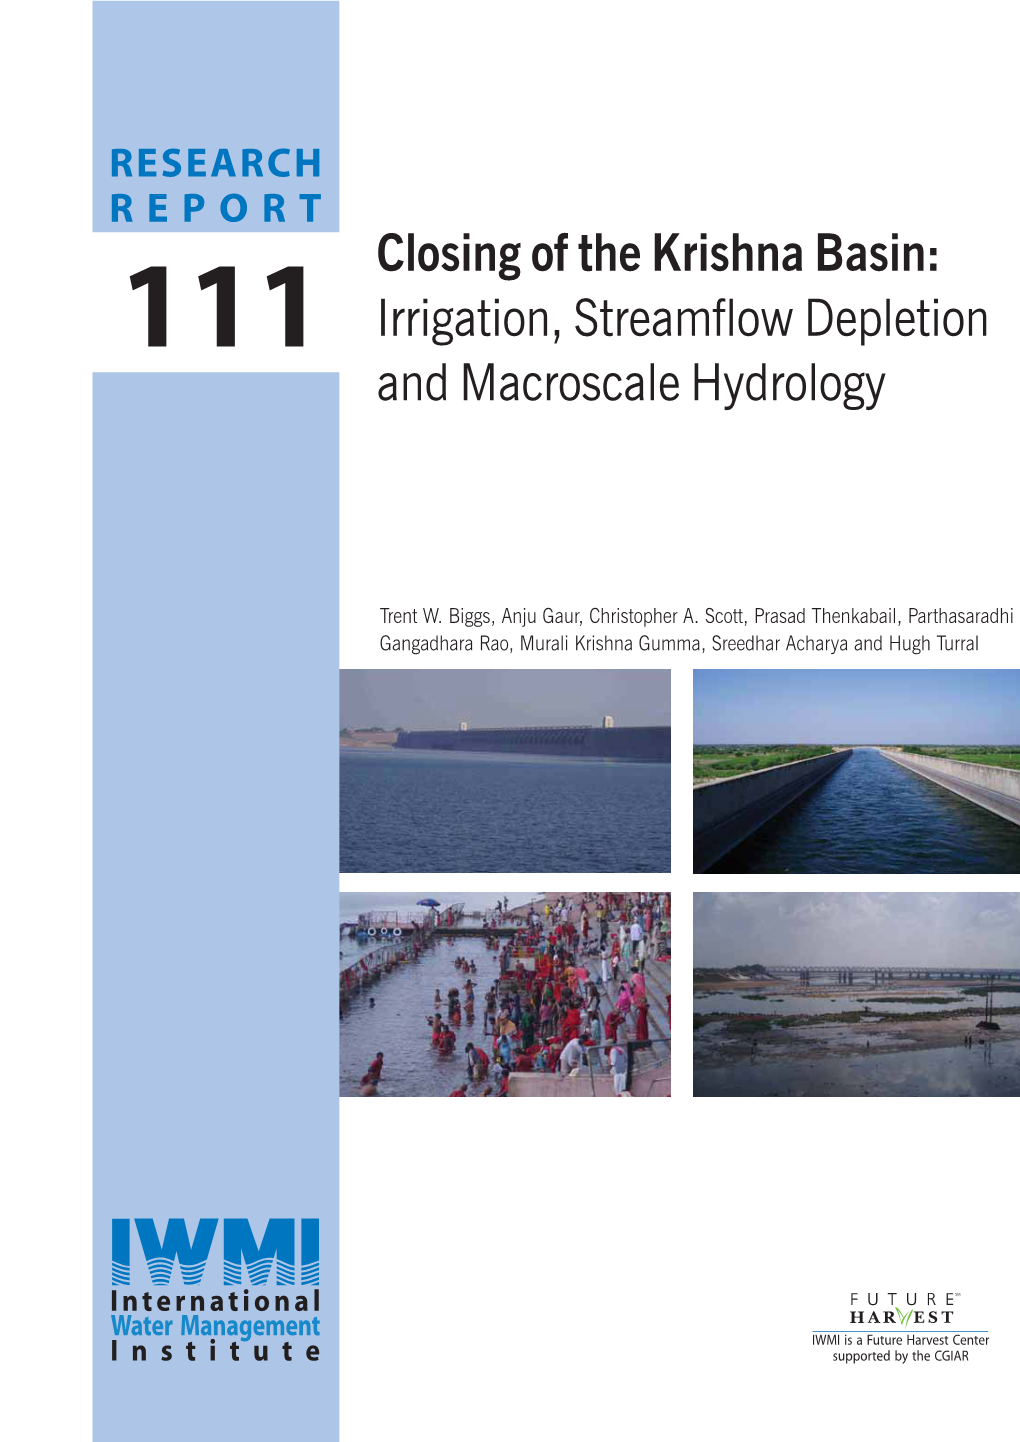 Closing of the Krishna Basin: Irrigation, Streamflow Depletion and Macroscale Hydrology